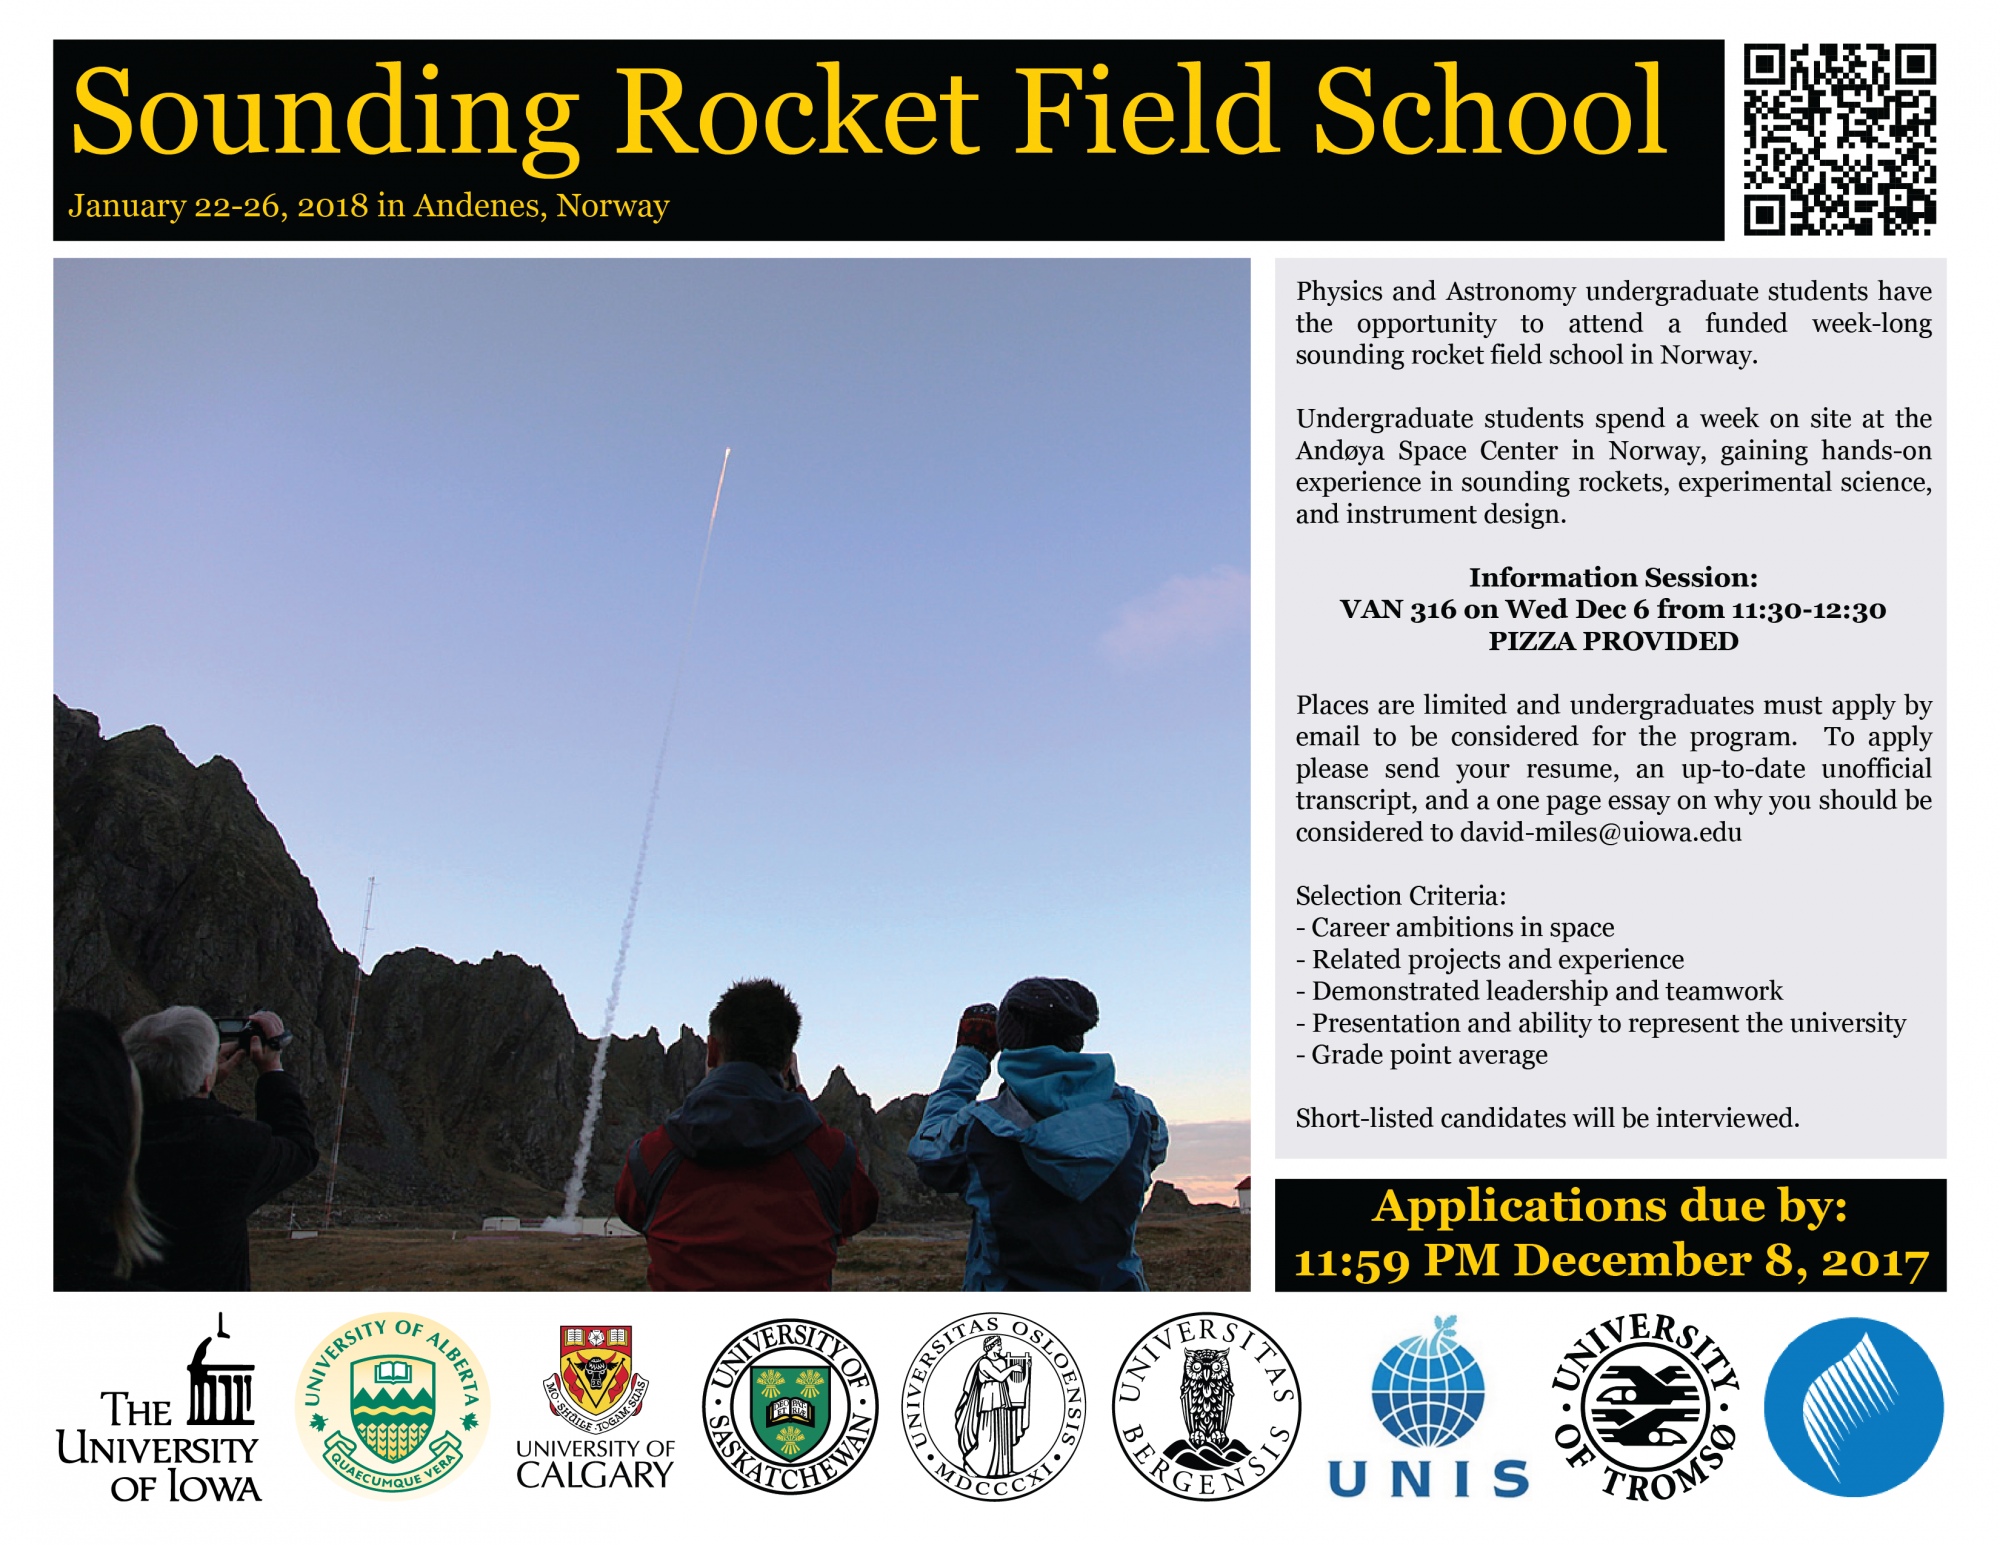 Recruitment for Sounding Rocket Field School